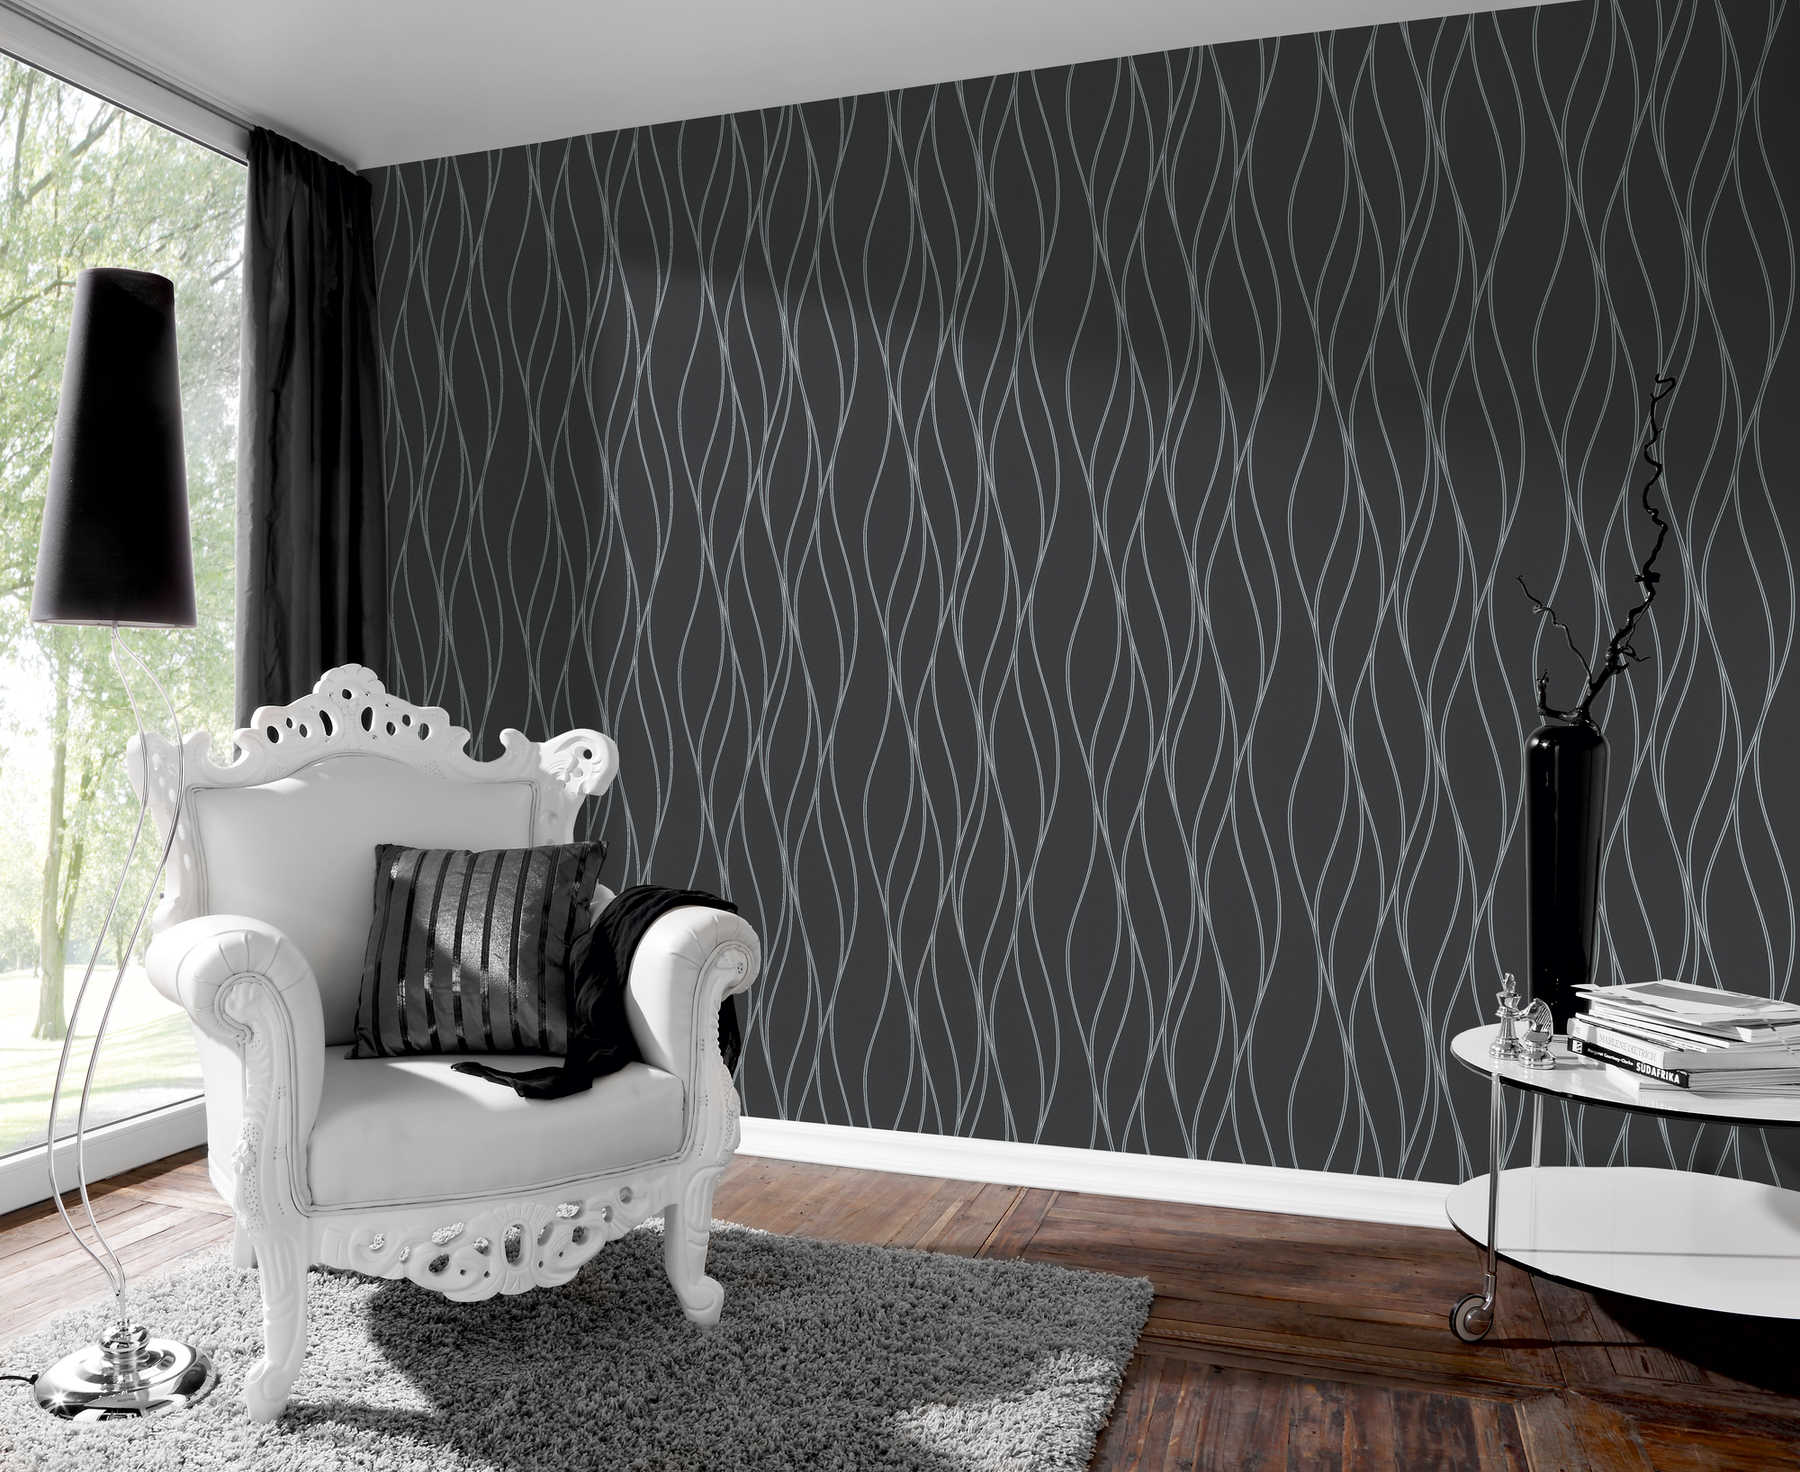             Wallpaper wavy lines vertical, metallic effect - black, silver, grey
        